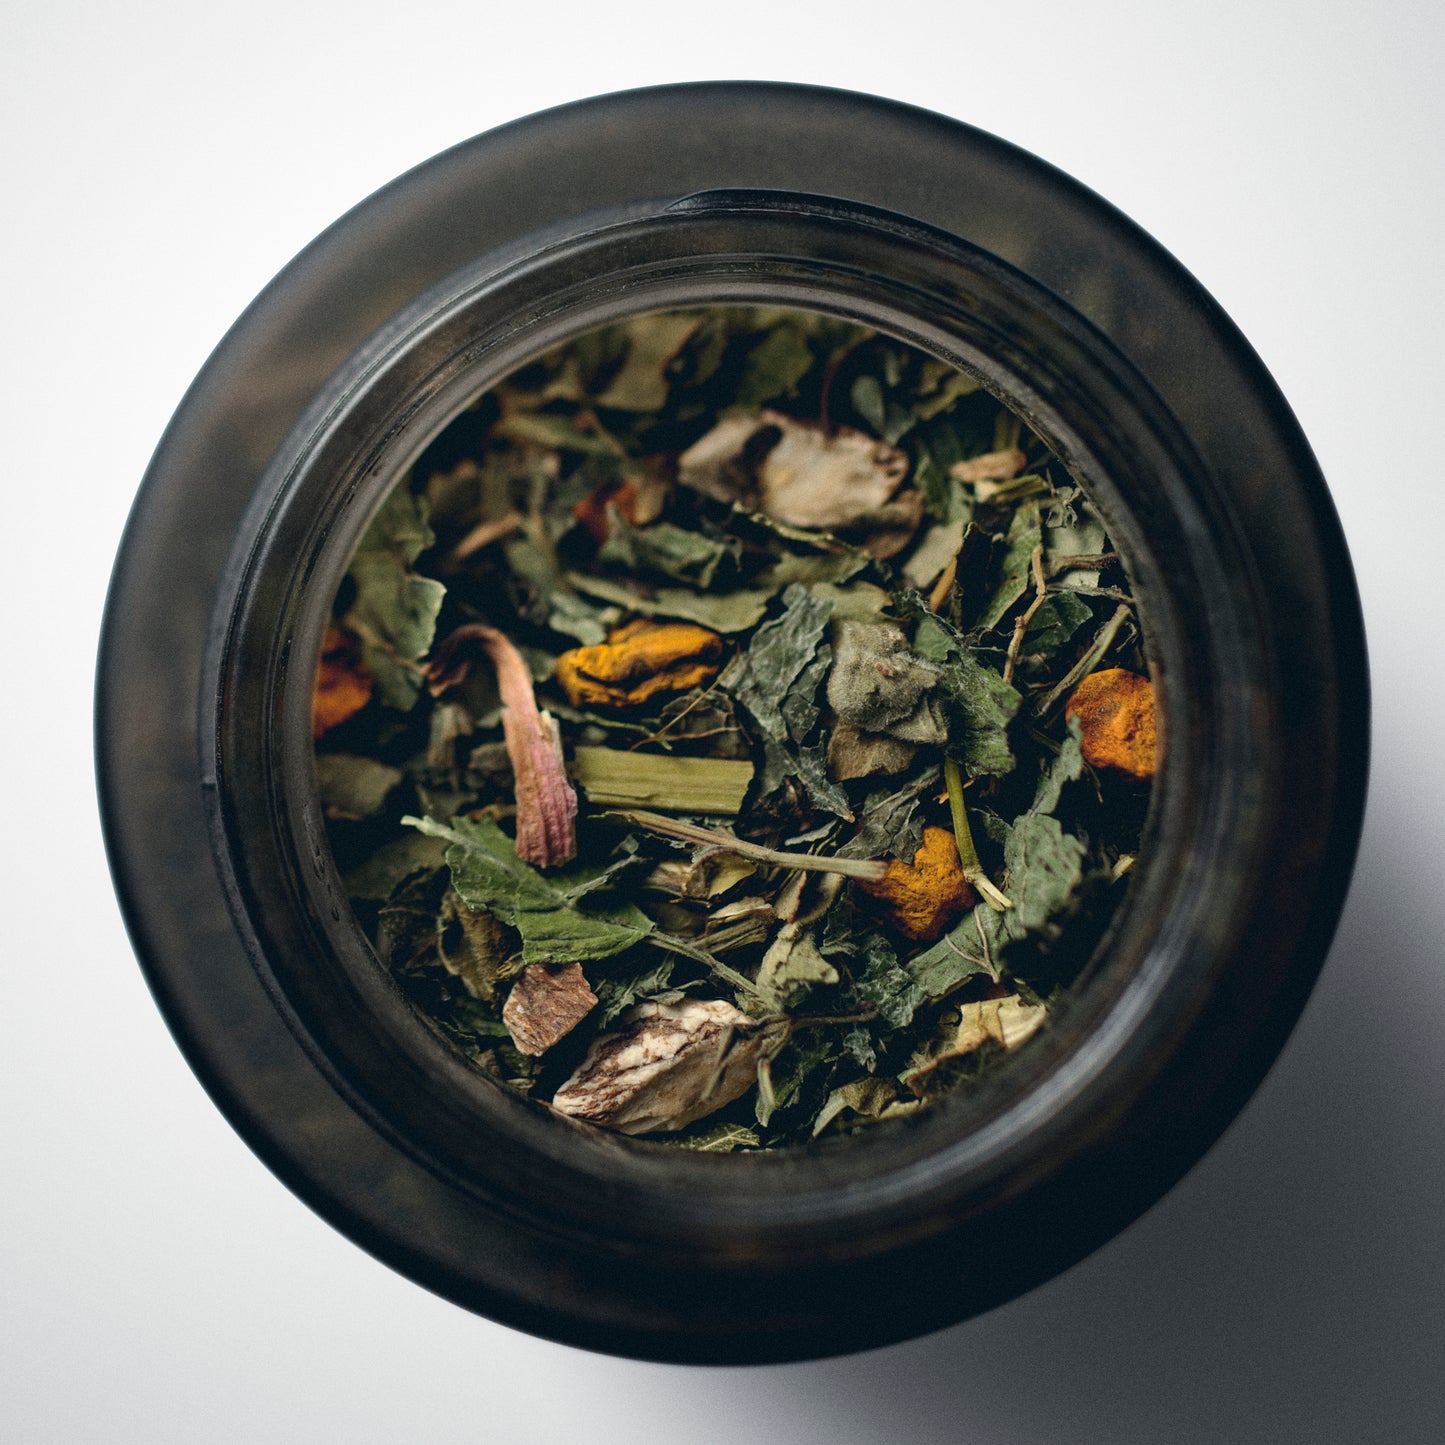 fasting tea in a jar